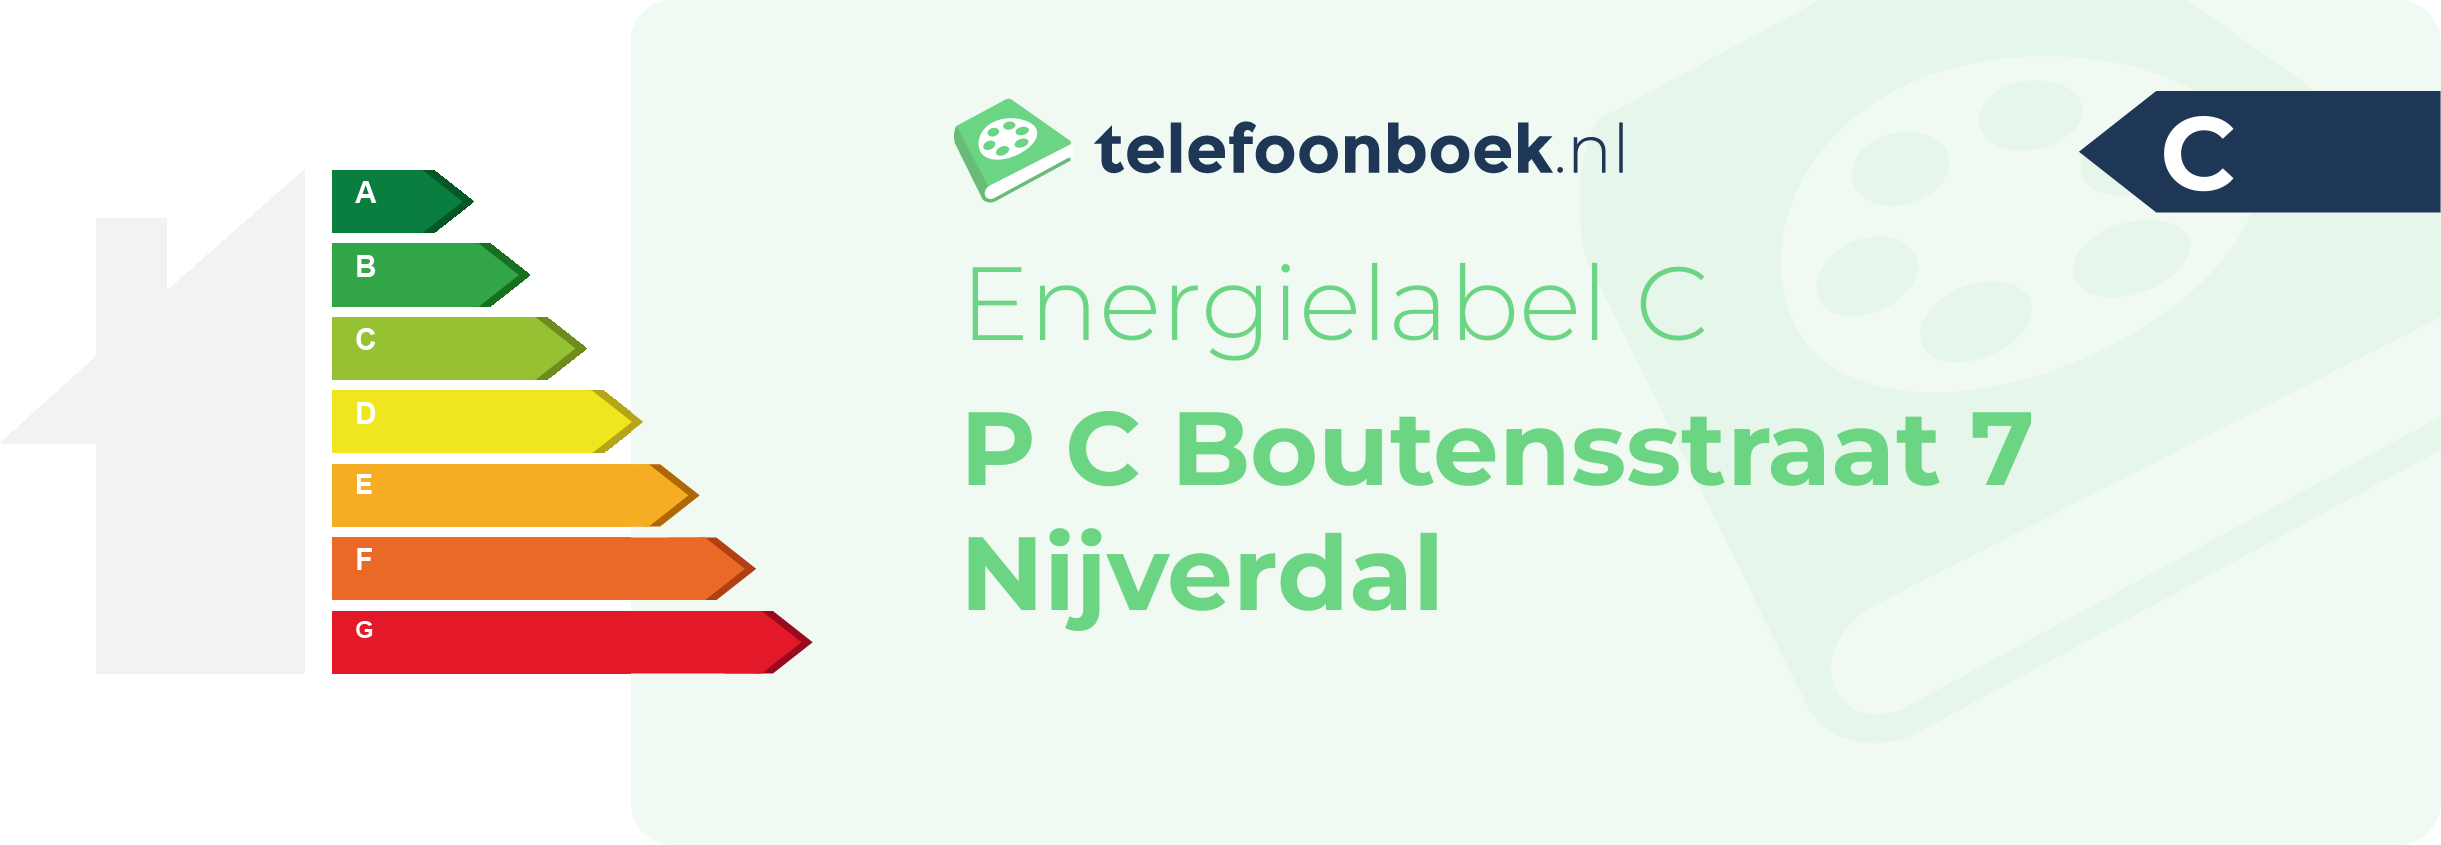 Energielabel P C Boutensstraat 7 Nijverdal